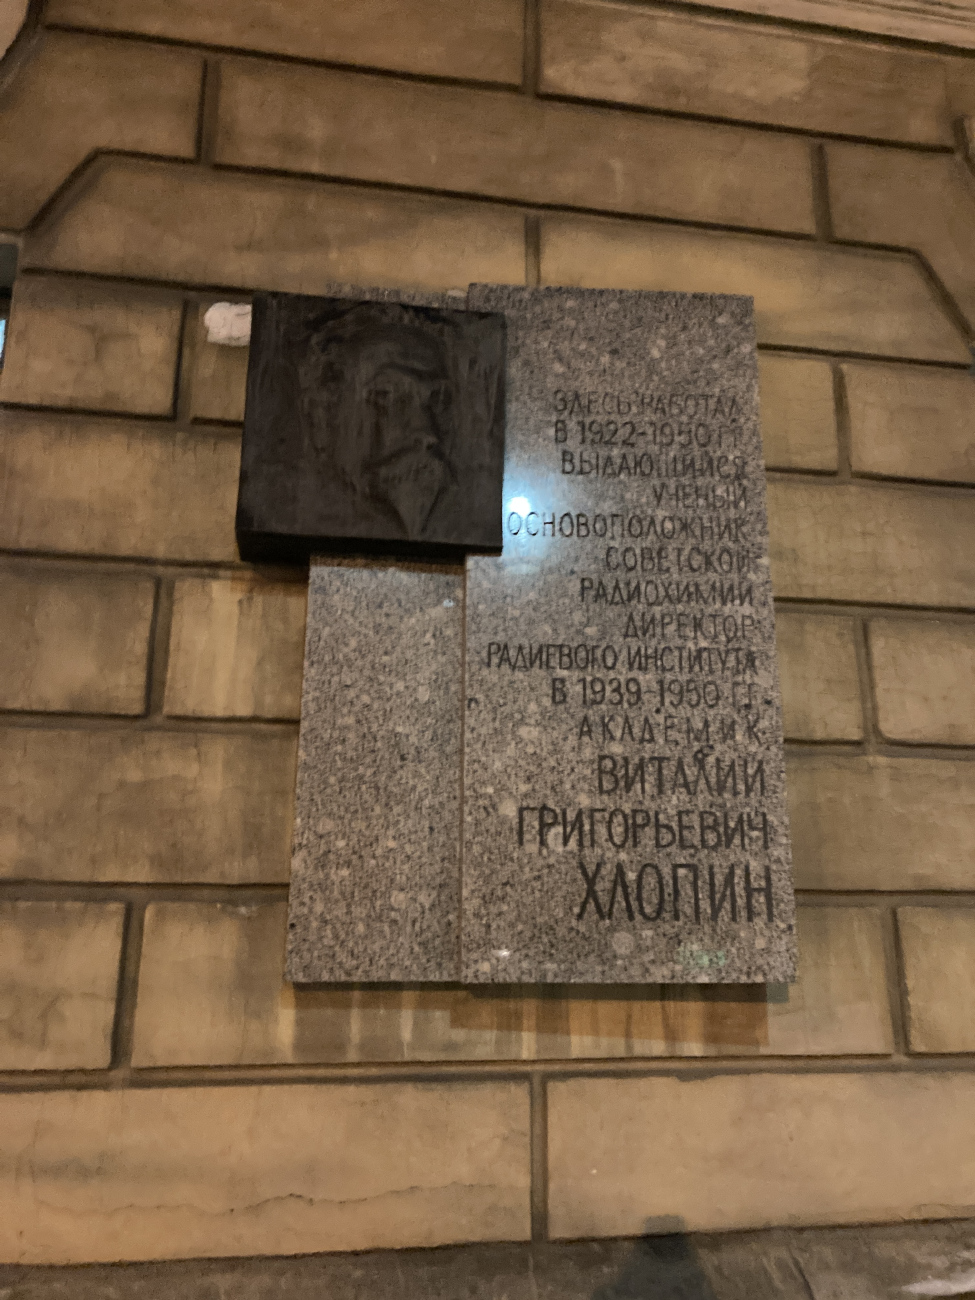 Saint Petersburg, Улица Рентгена, 1. Saint Petersburg — Memorial plaques